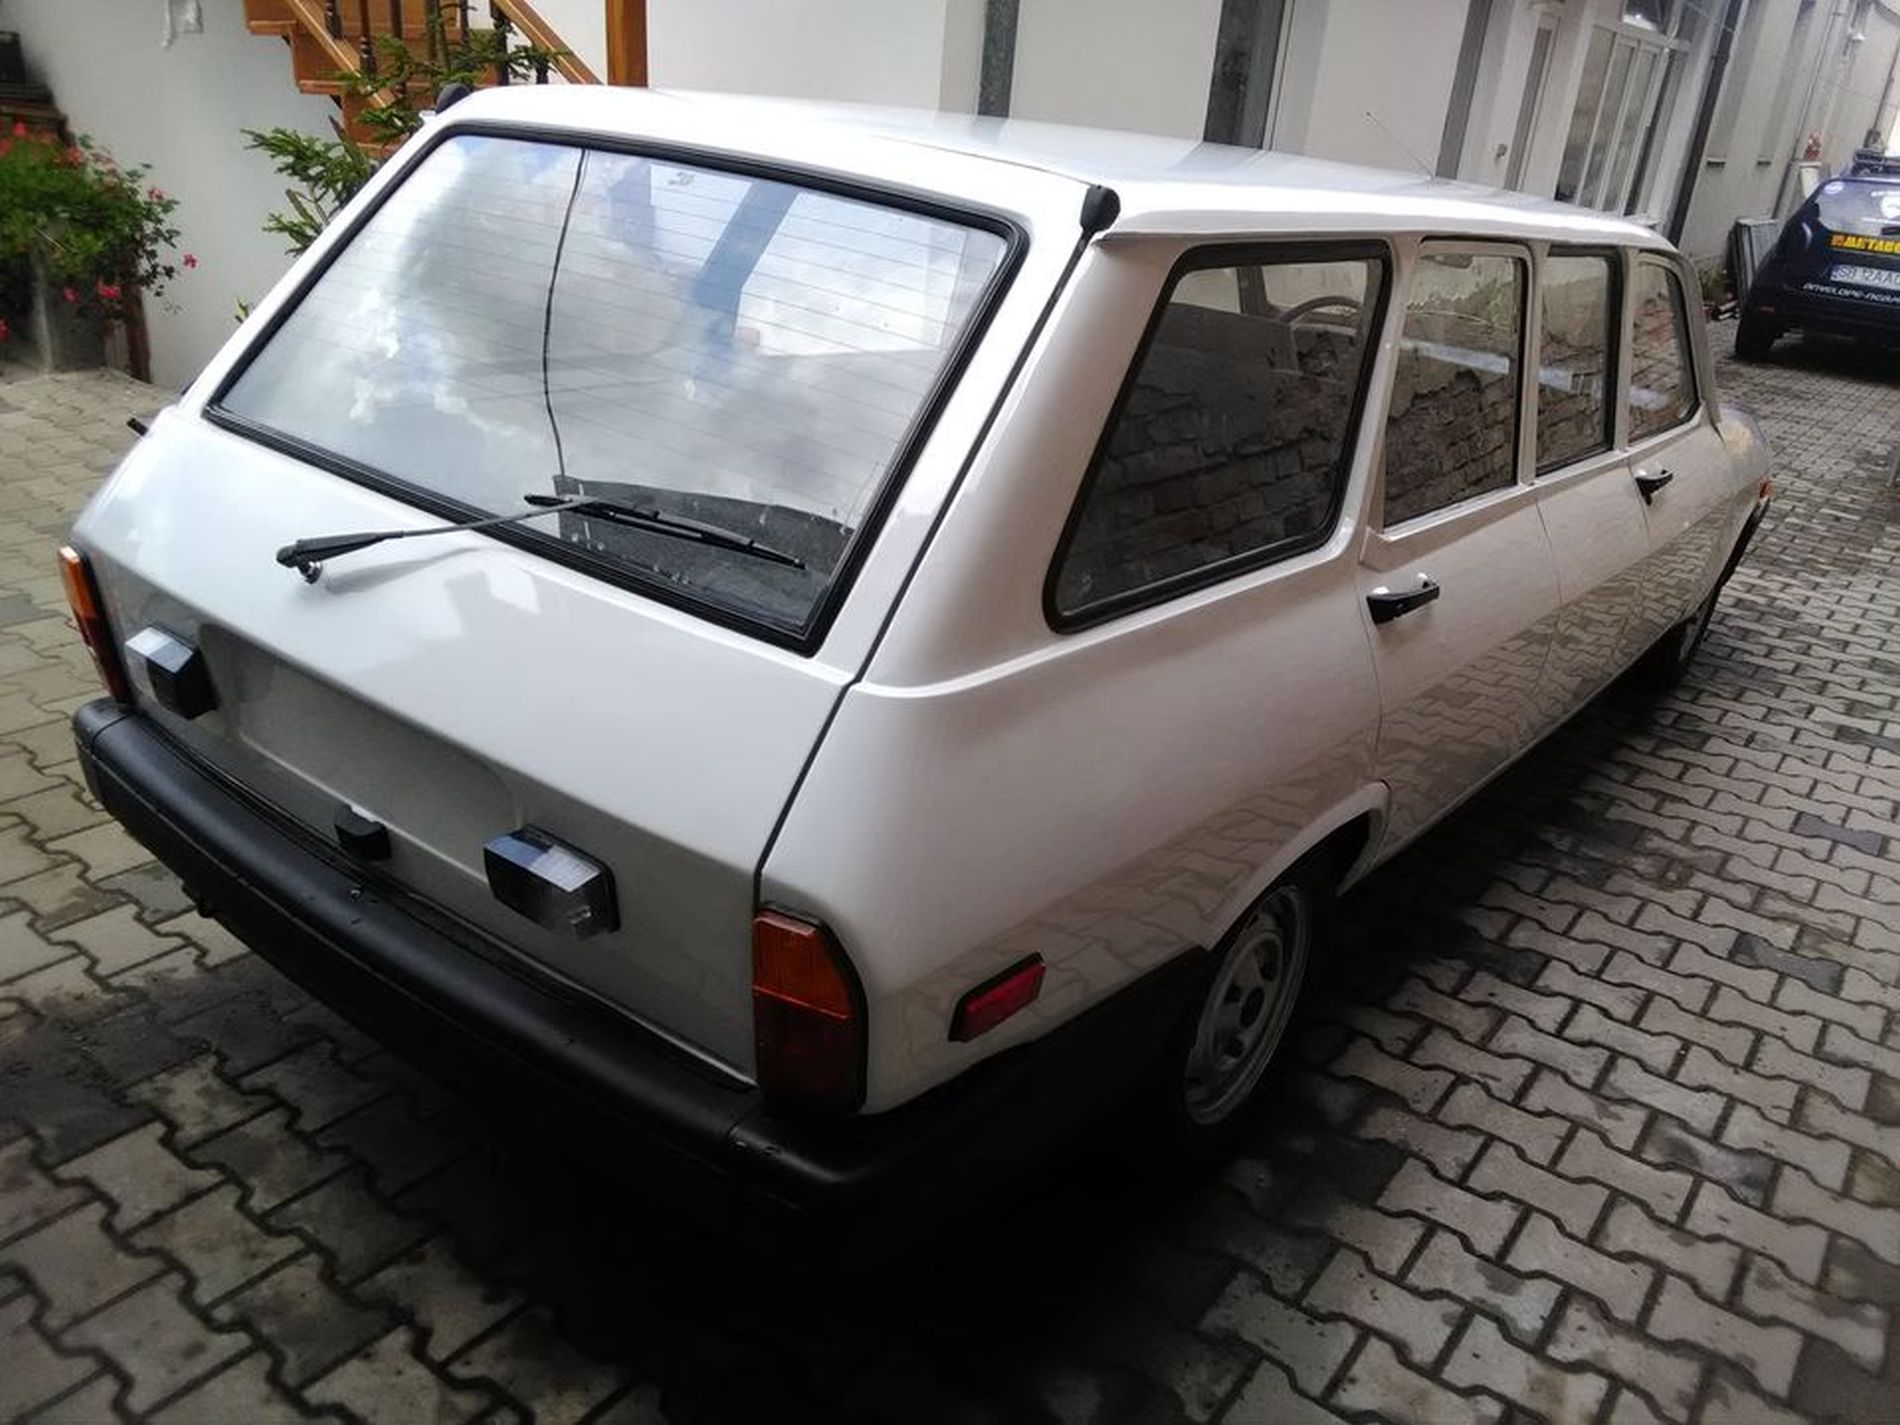 Raritate - un exemplar Dacia Maxibreak  a fost scos la vânzare